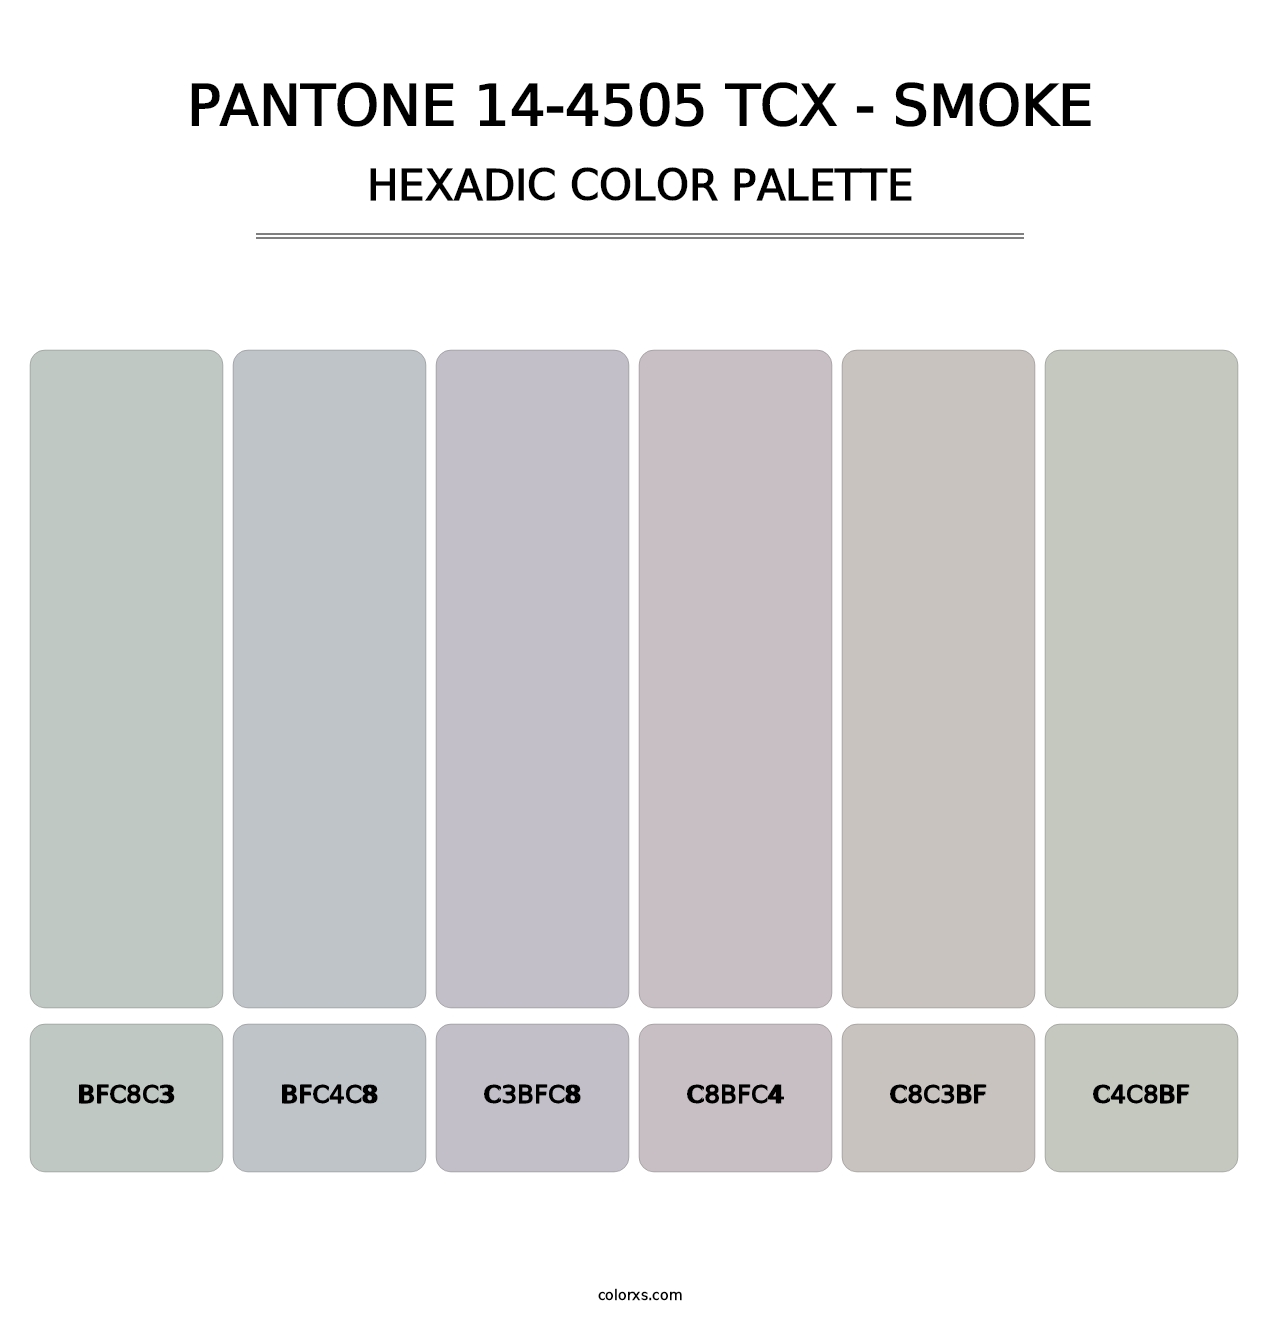 PANTONE 14-4505 TCX - Smoke - Hexadic Color Palette